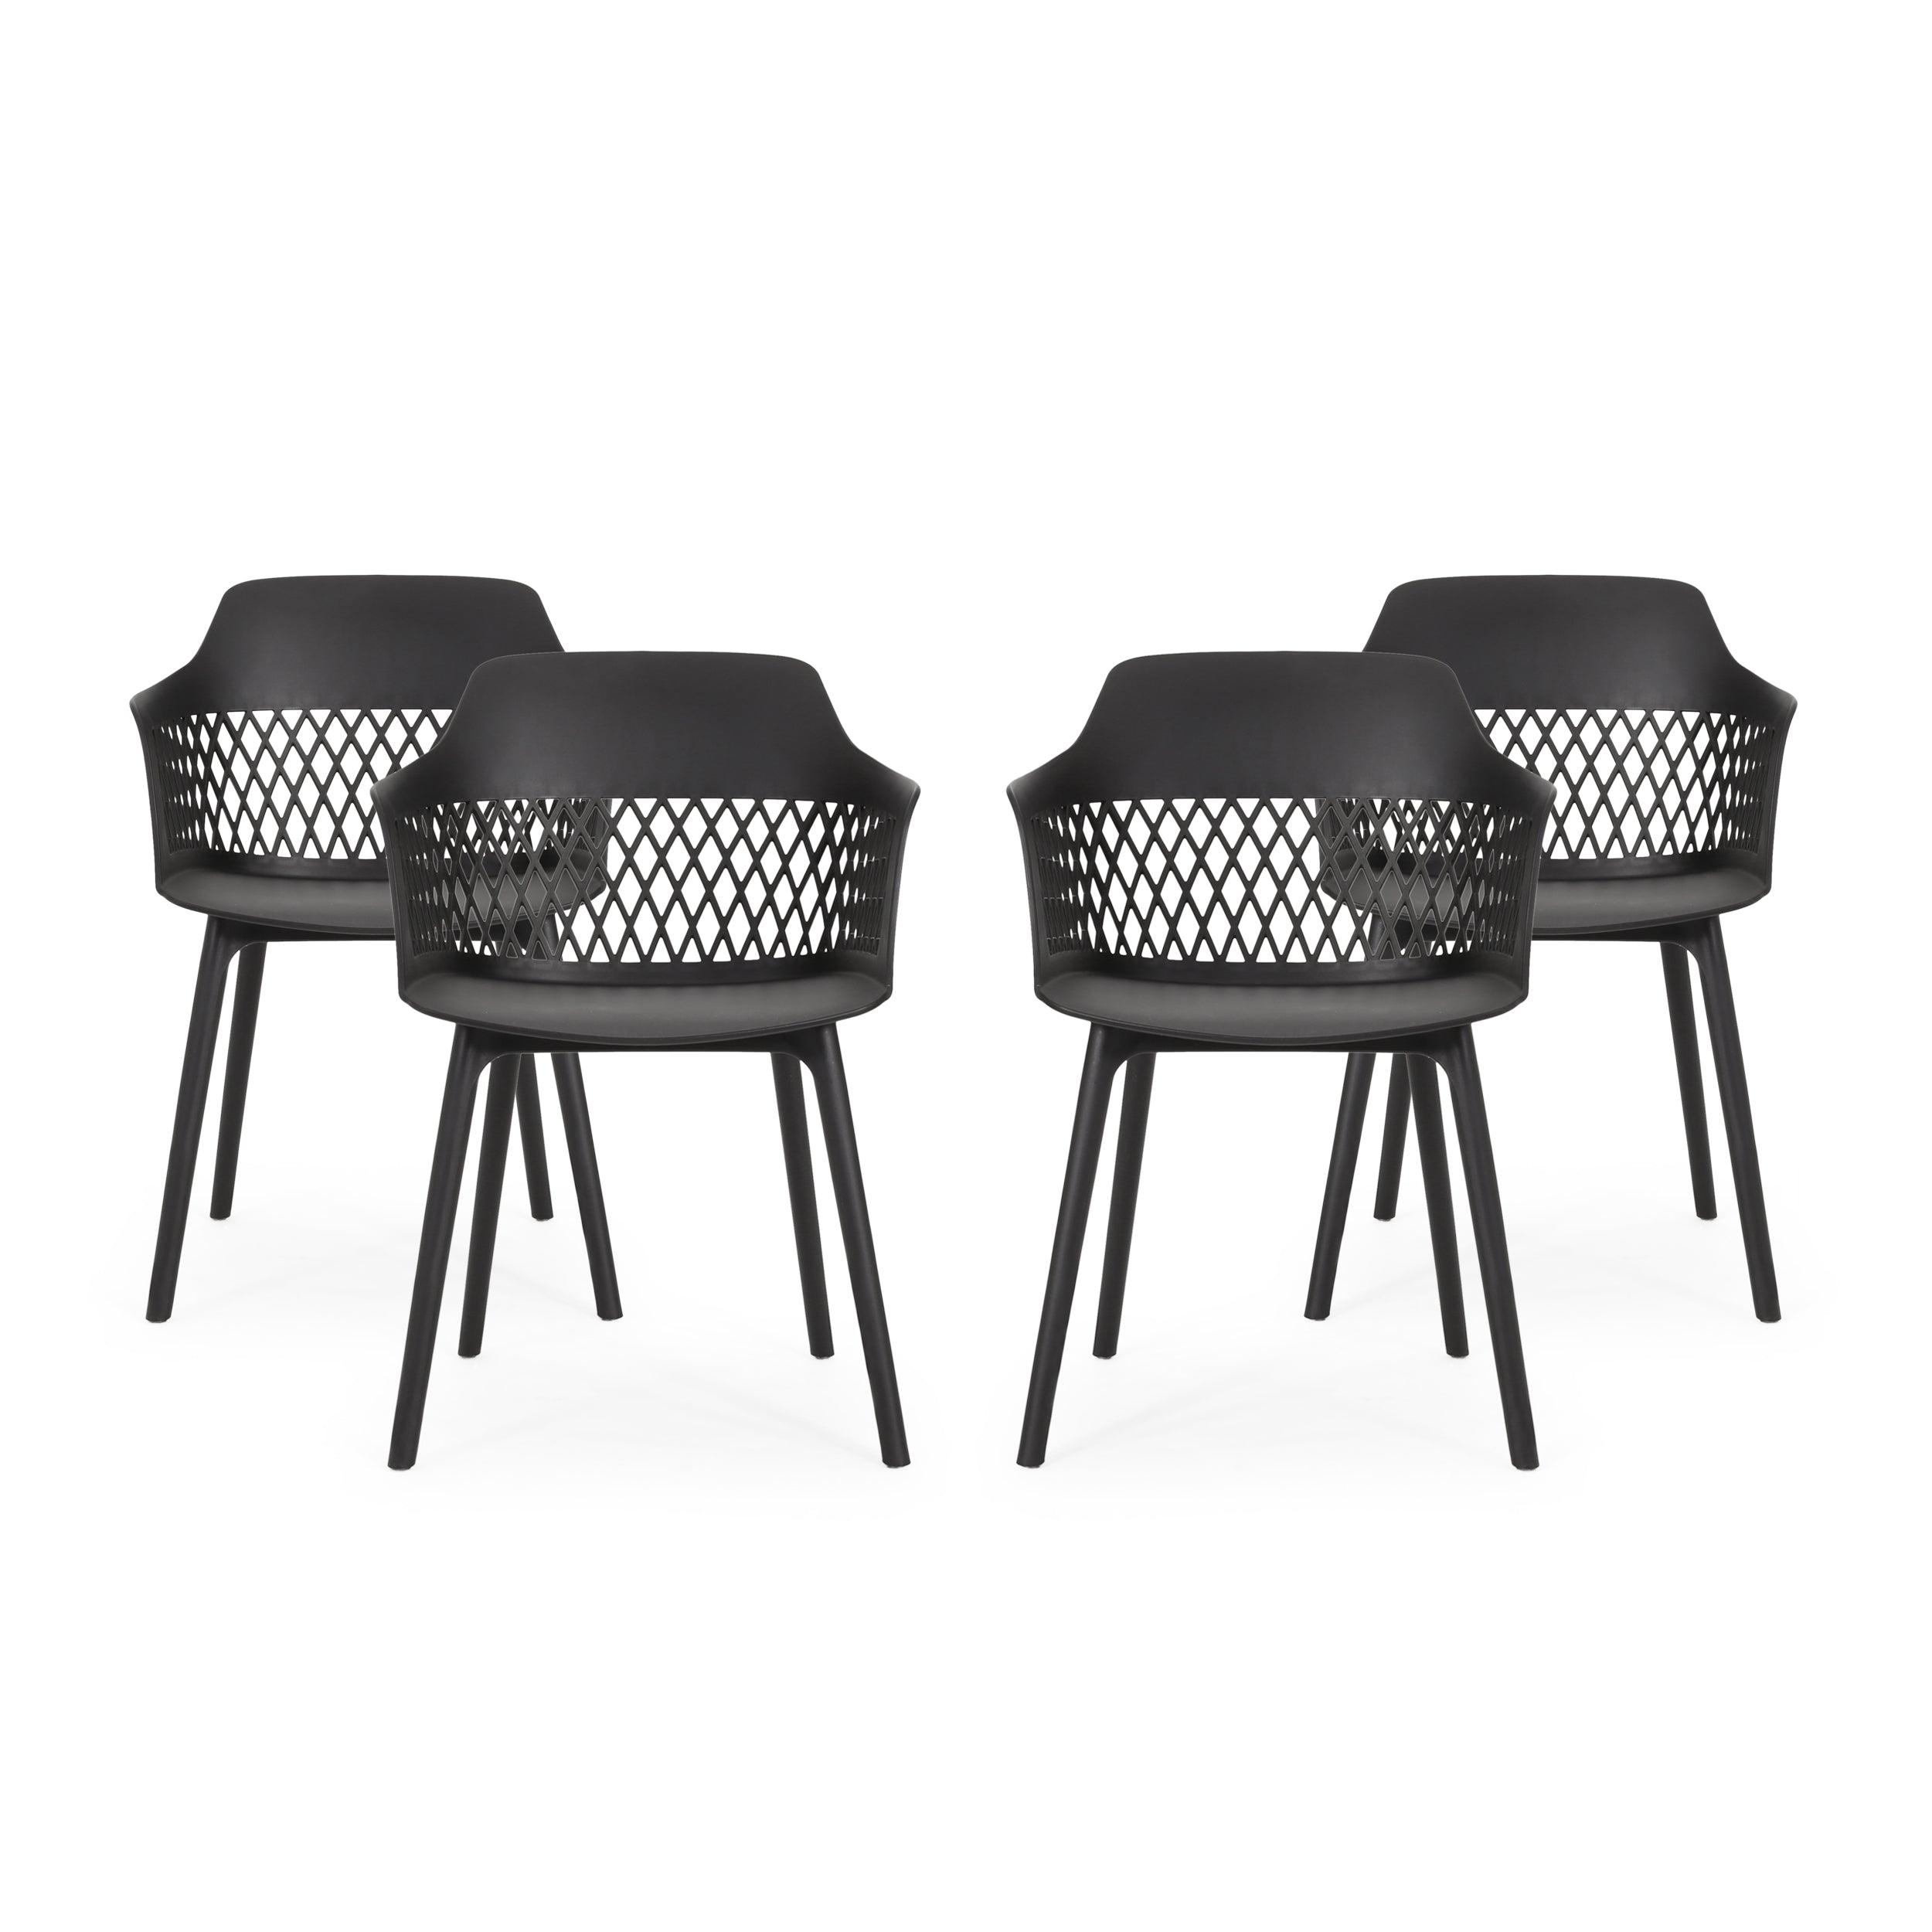 Airyanna Outdoor Modern Dining Chair Set of 4 Black